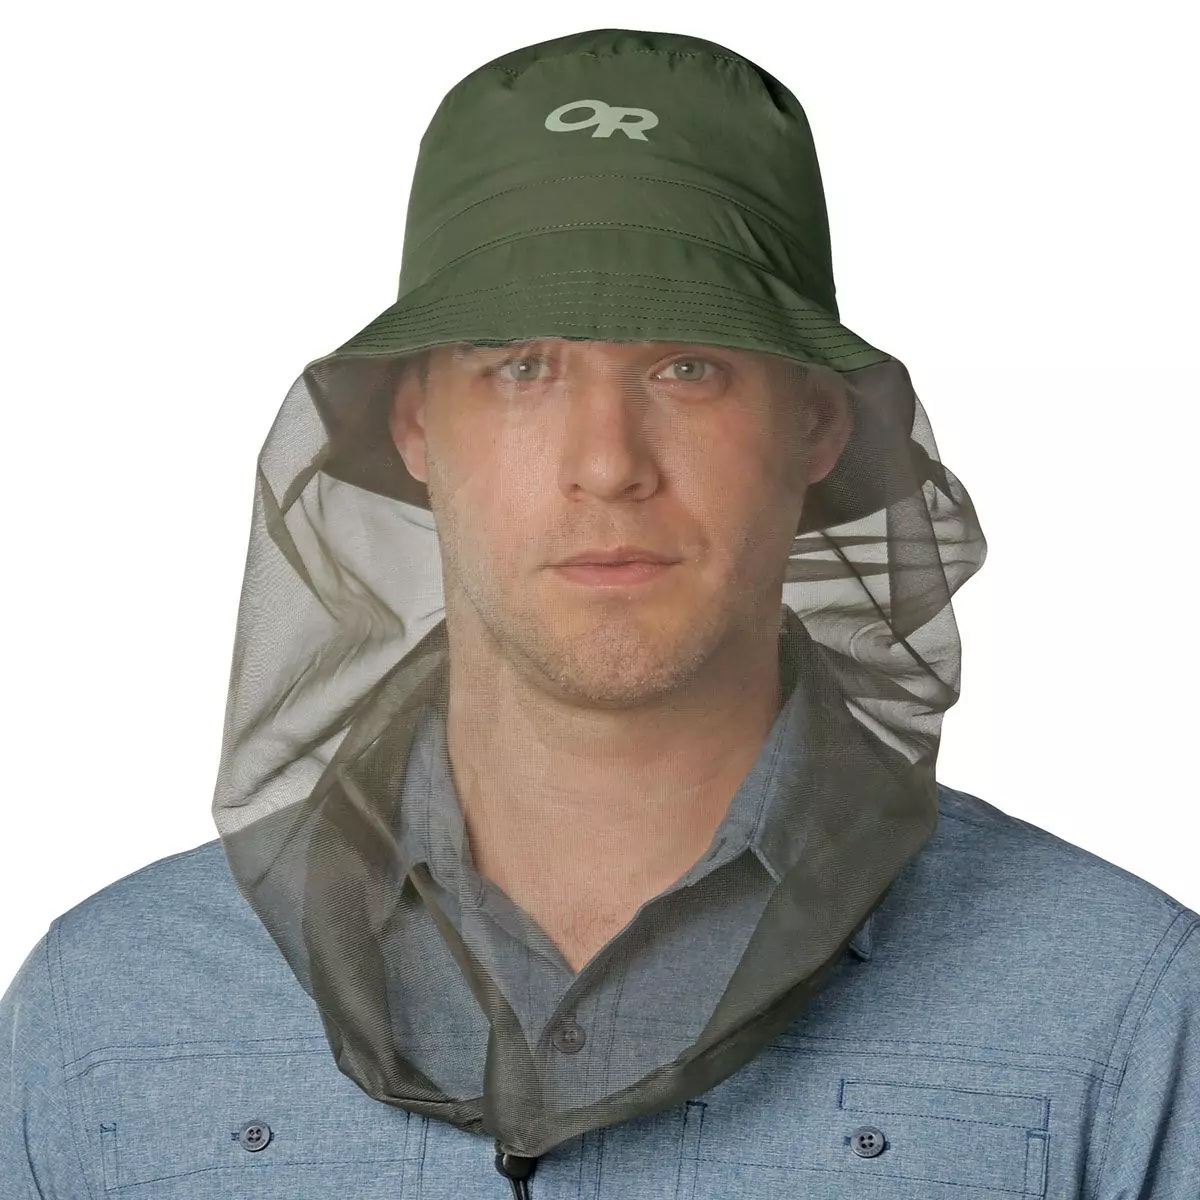 OR 243380-800-L Waterproof Hat, Men's, L, Nylon, Khaki - 2